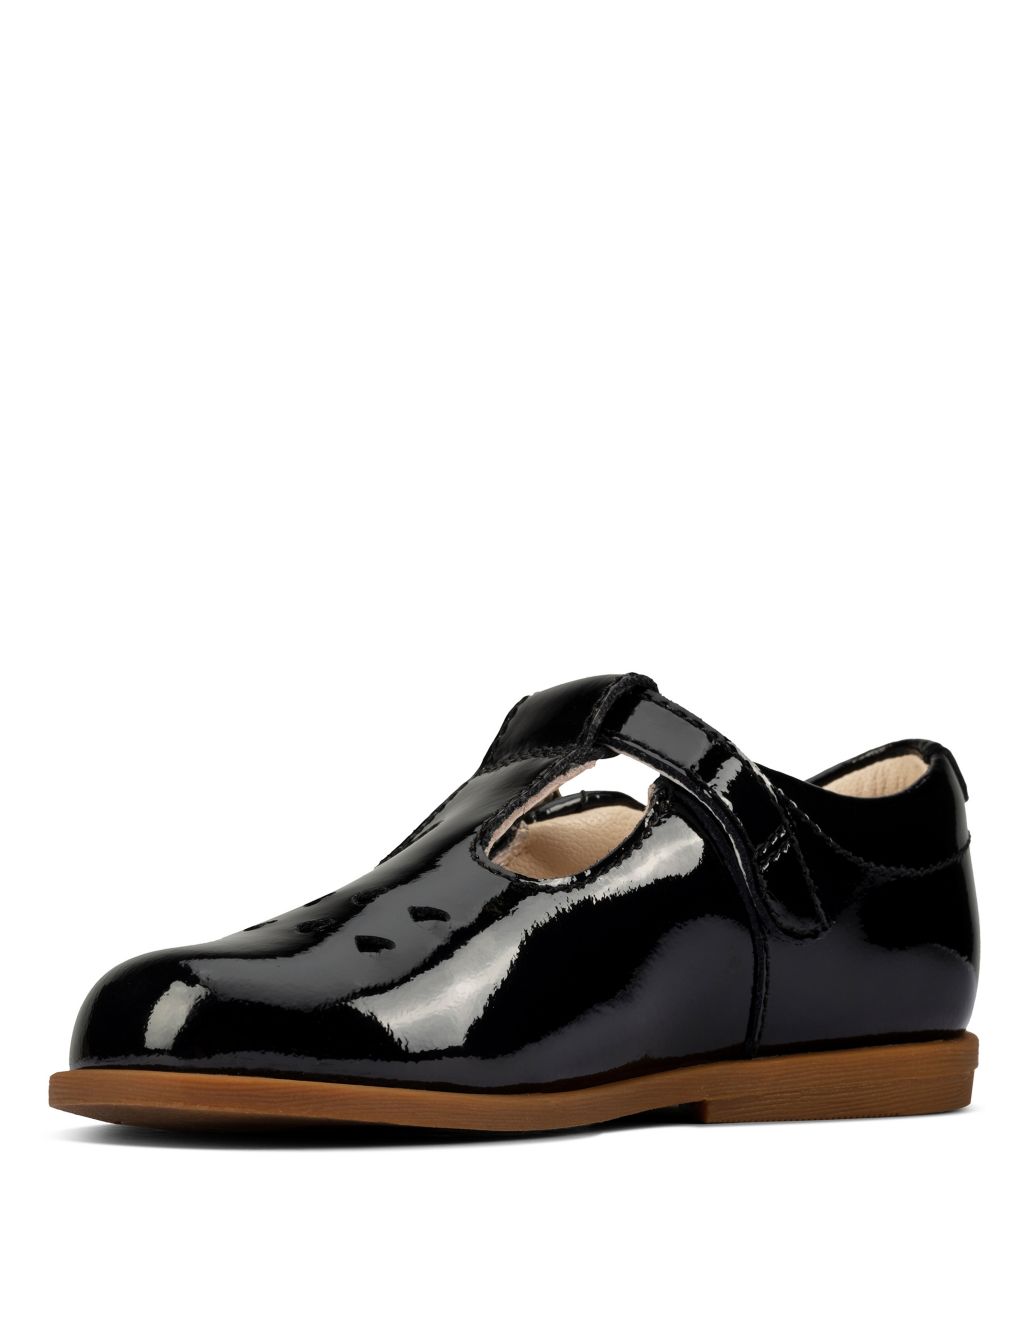 Kids' Leather Mary Jane Shoes image 5